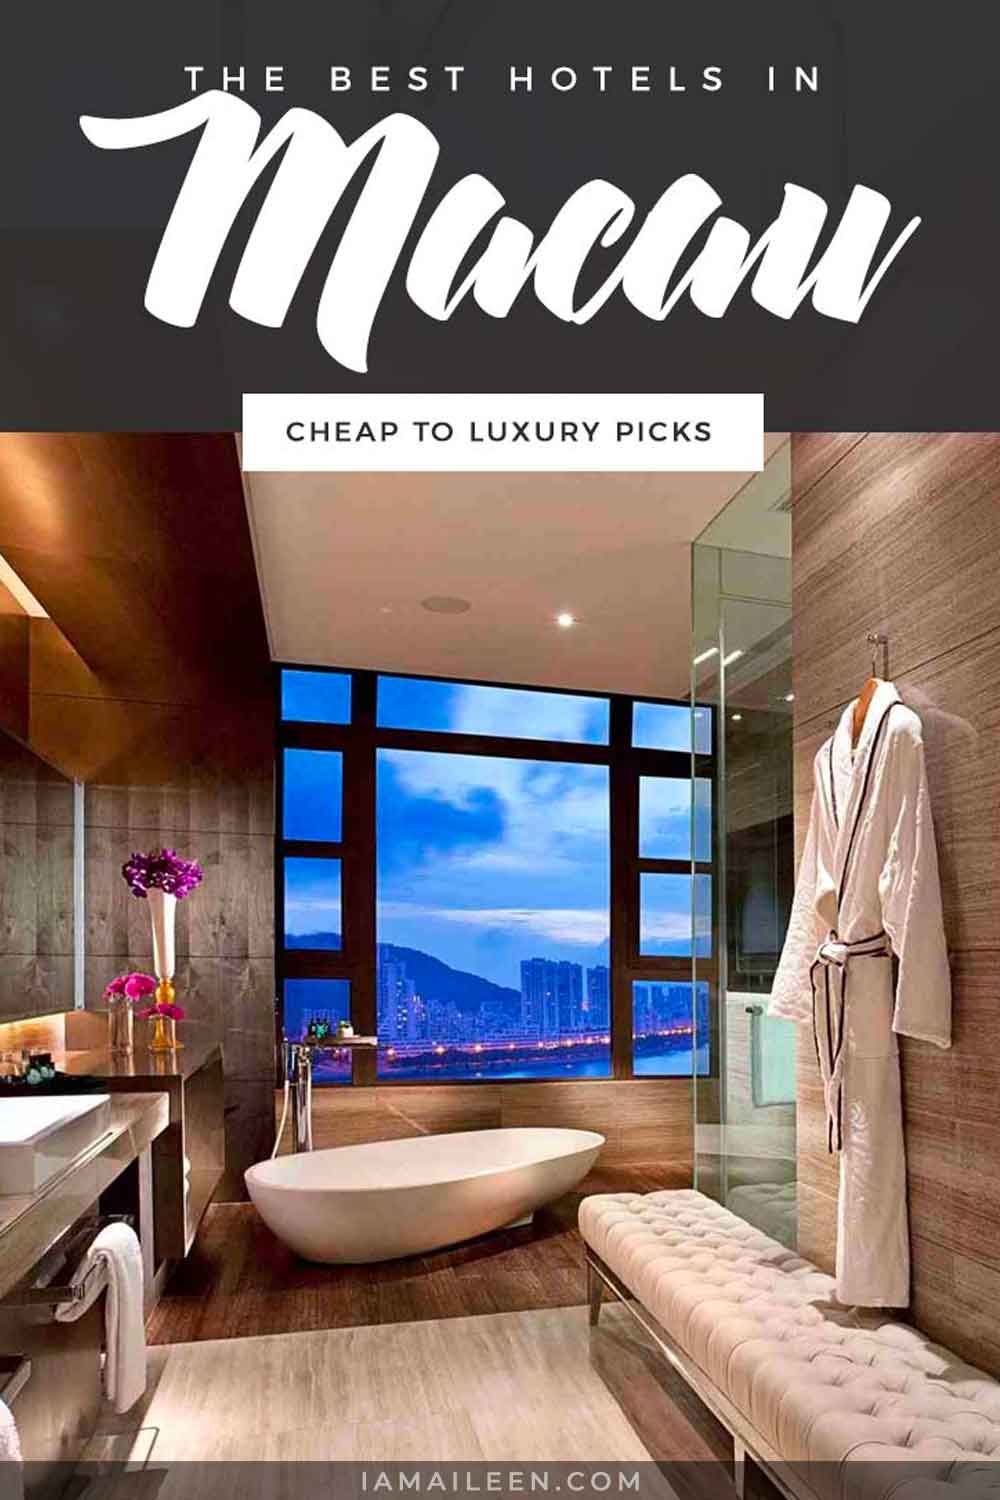 The Best Hotels in Macau: Cheap to Luxury Picks